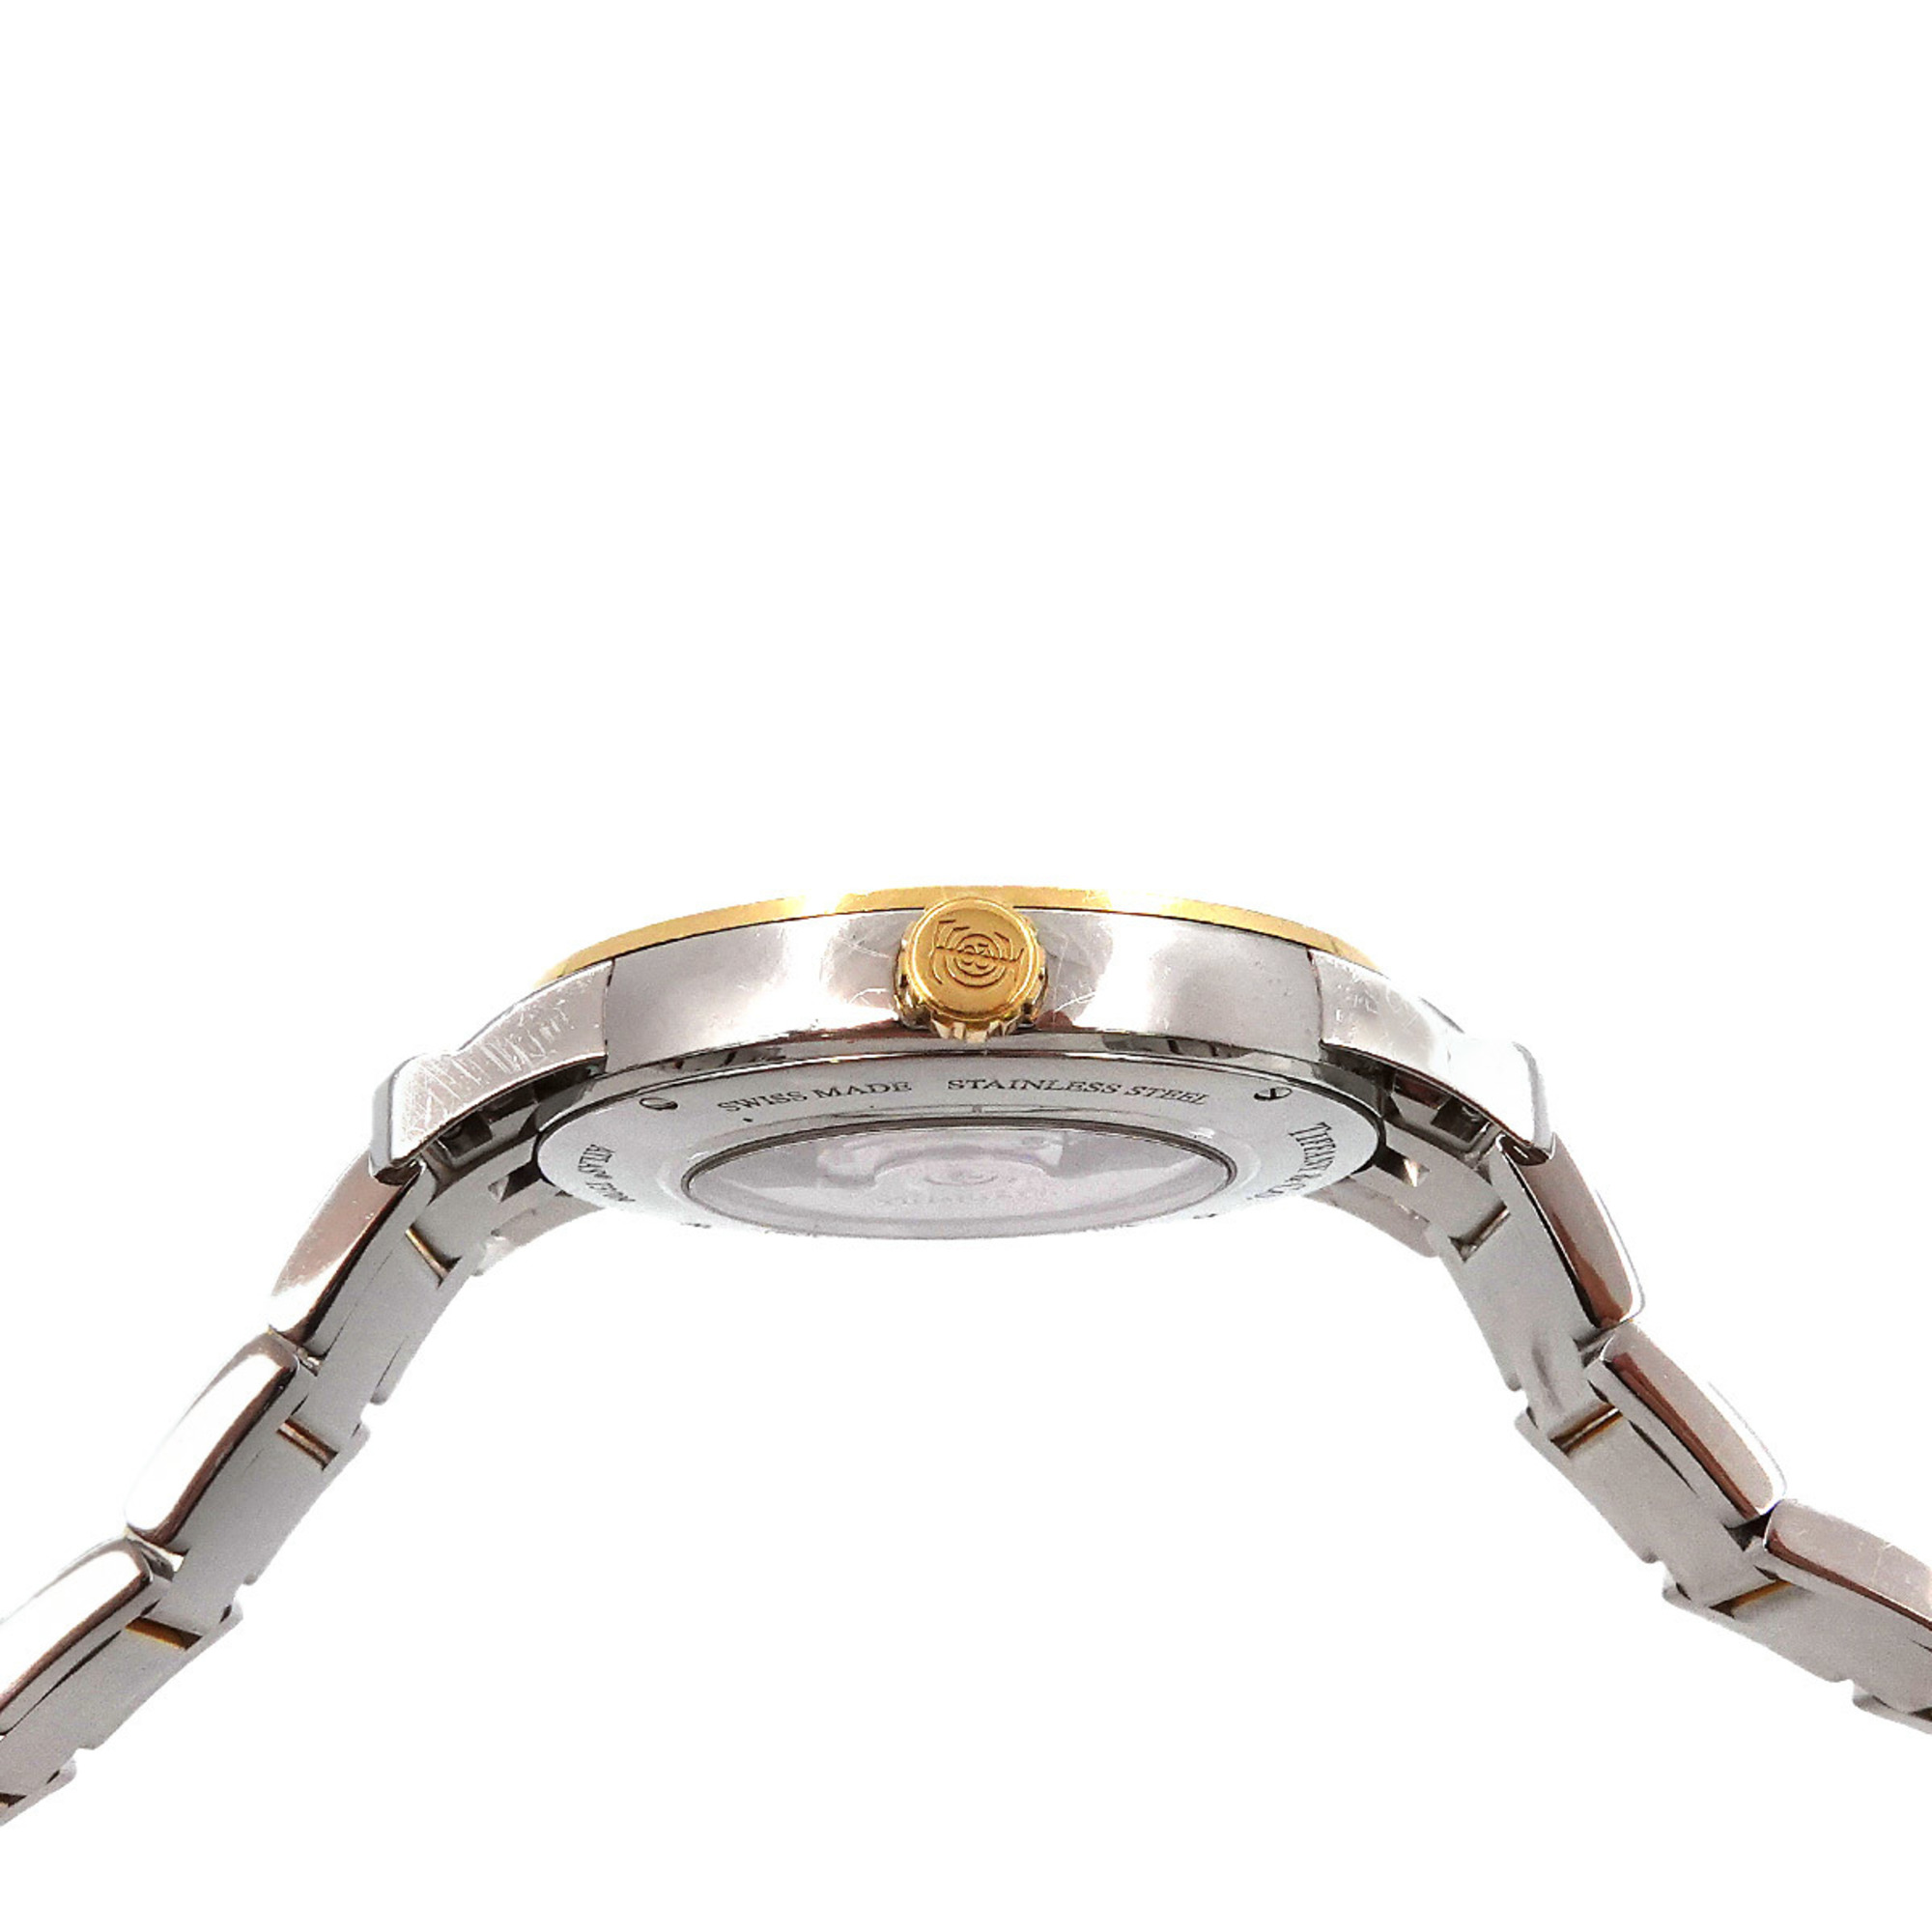 Tiffany & Co. Atlasdome Combi Z1810 68 15A21A00A Men's Watch Date Silver Dial GP Luton Automatic Self-Winding